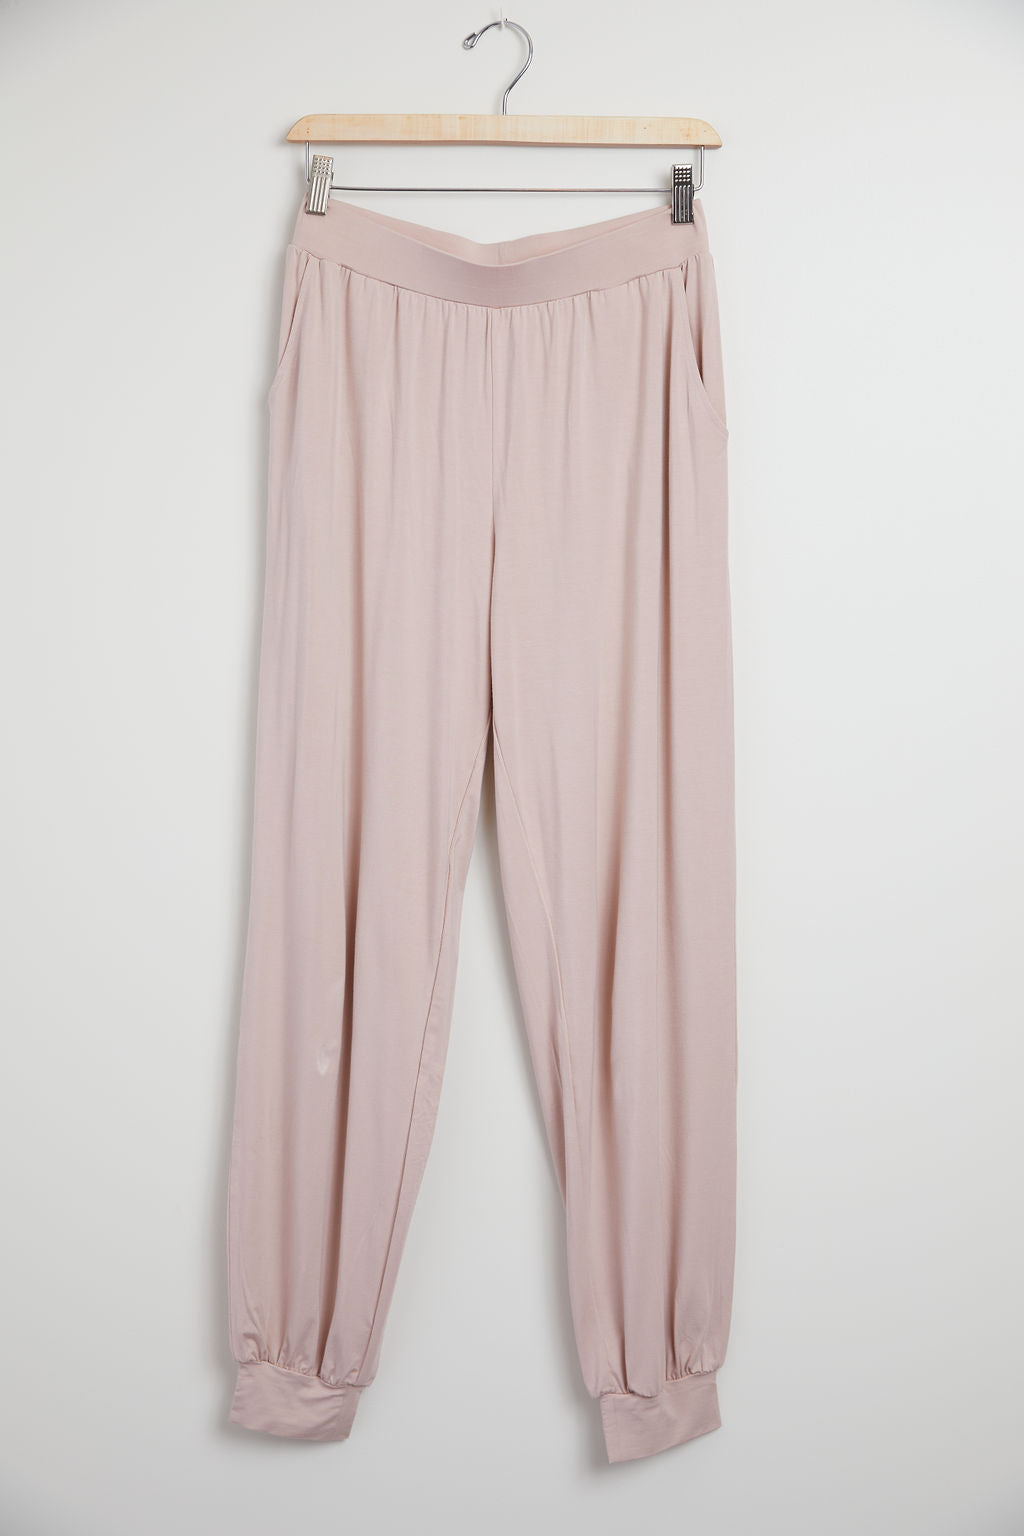 Women's Bamboo Pajamas - Relaxed Long Sleeve + Harem Pant Set